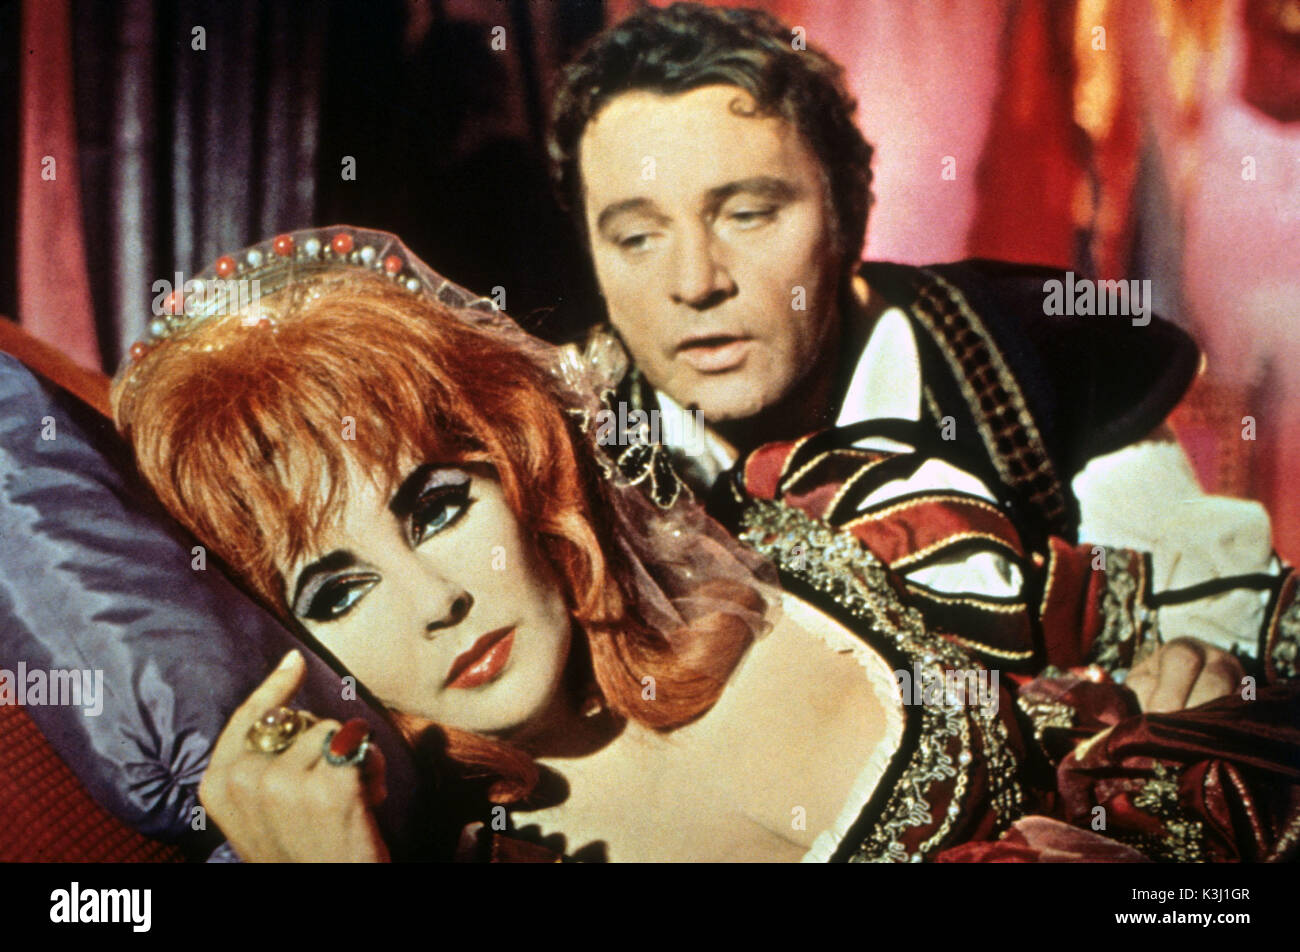 DOCTOR FAUSTUS ELIZABETH TAYLOR as Helen of Troy, RICHARD BURTON as Doctor Faustus     Date: 1967 Stock Photo